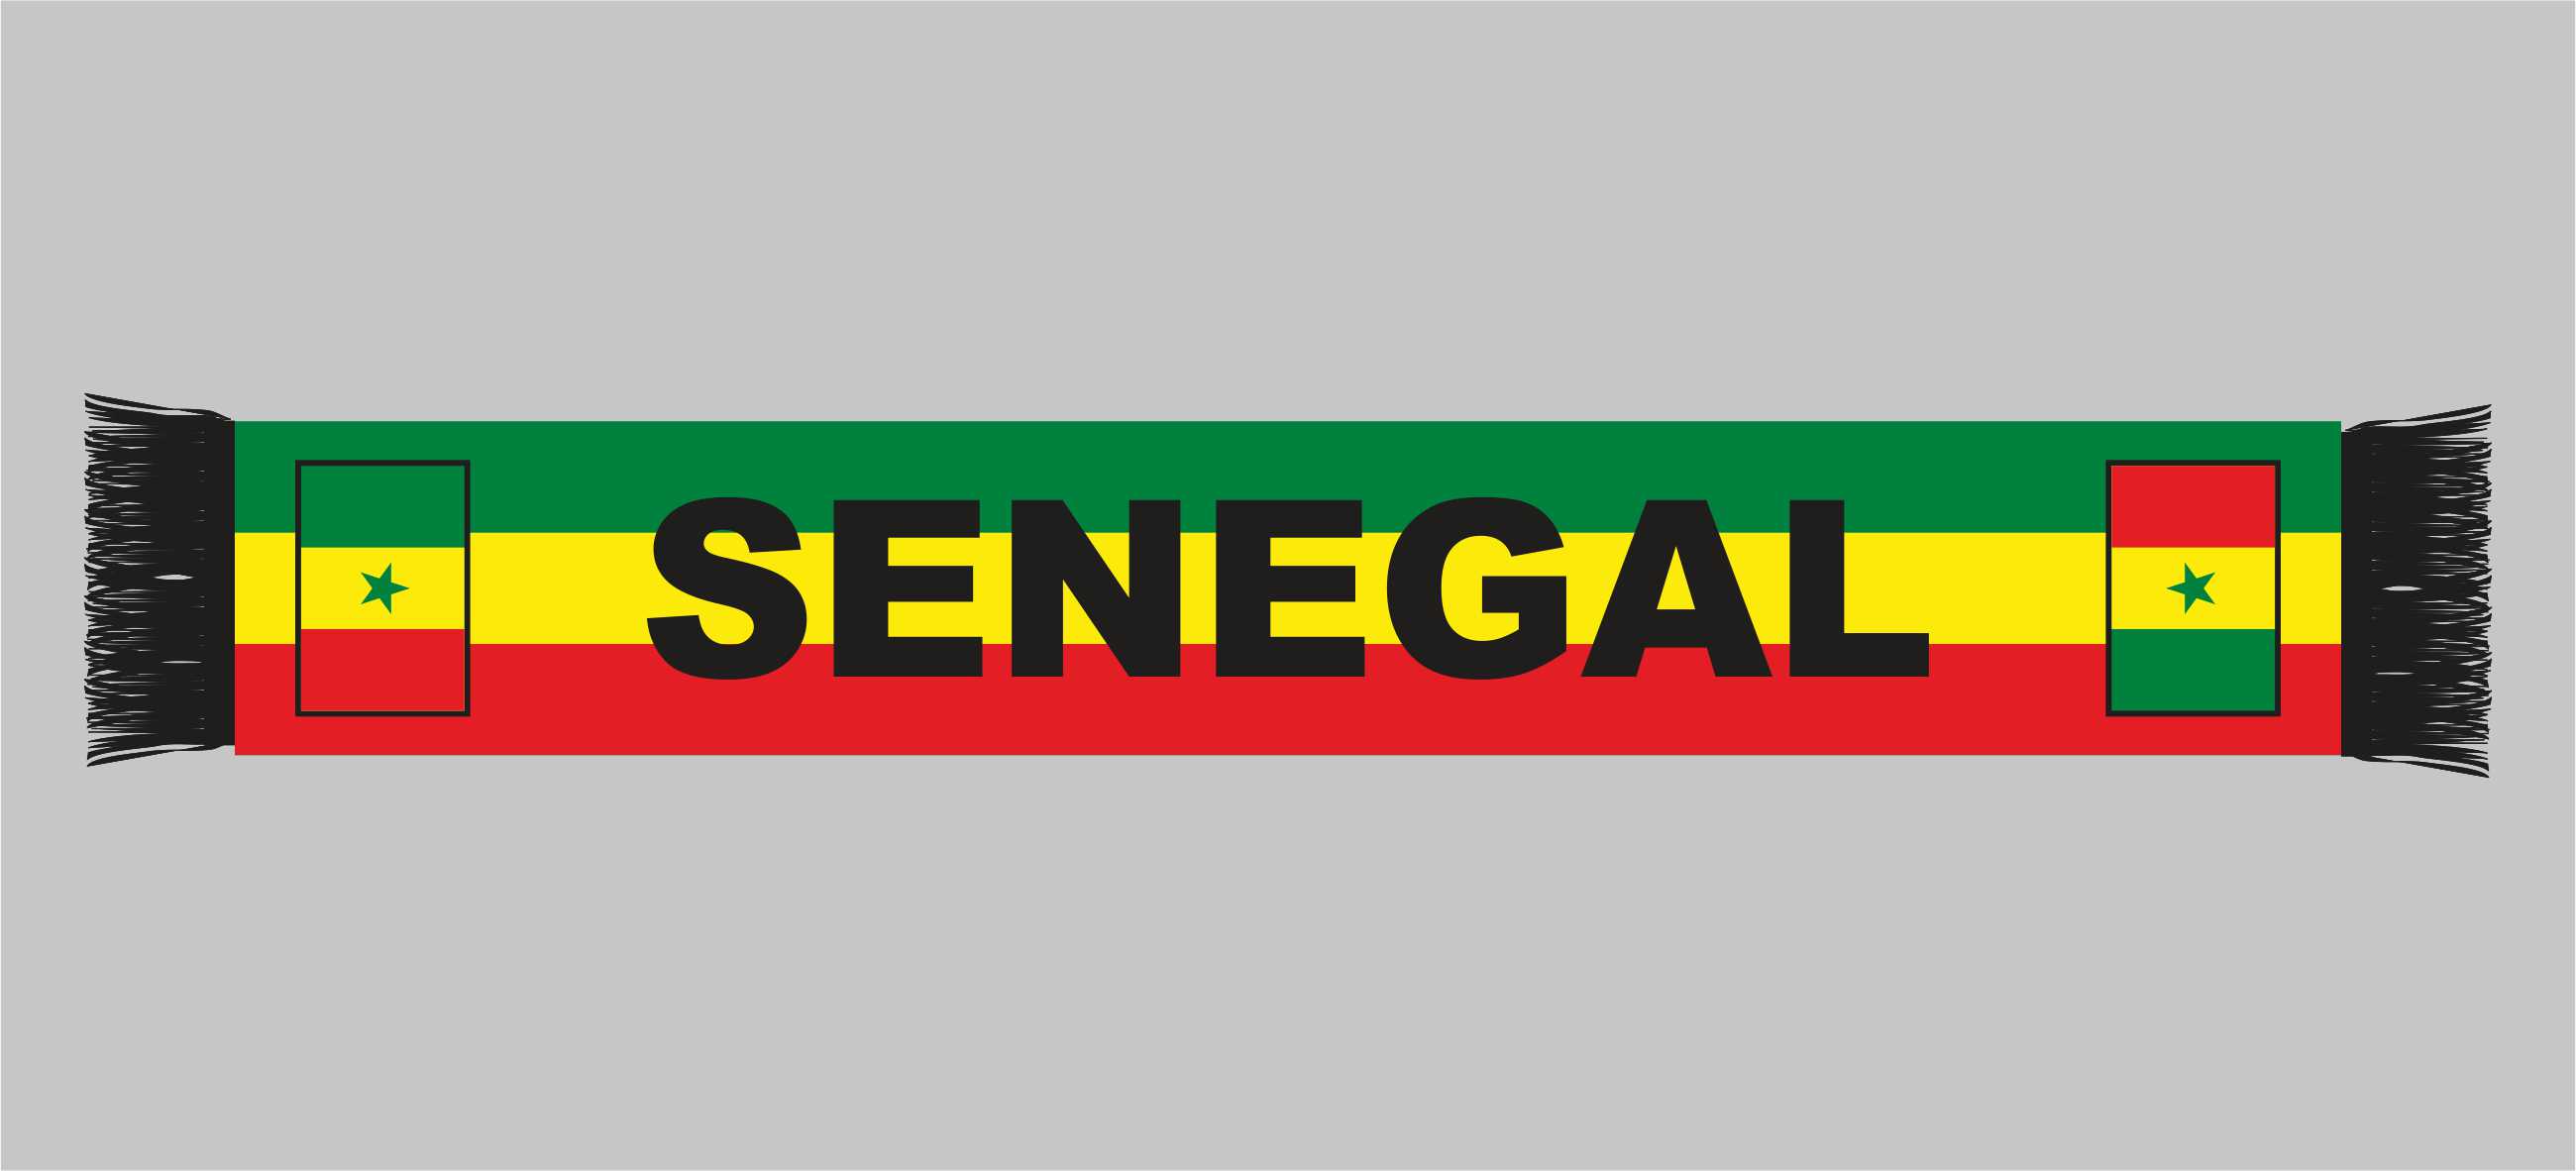 Schal Senegal